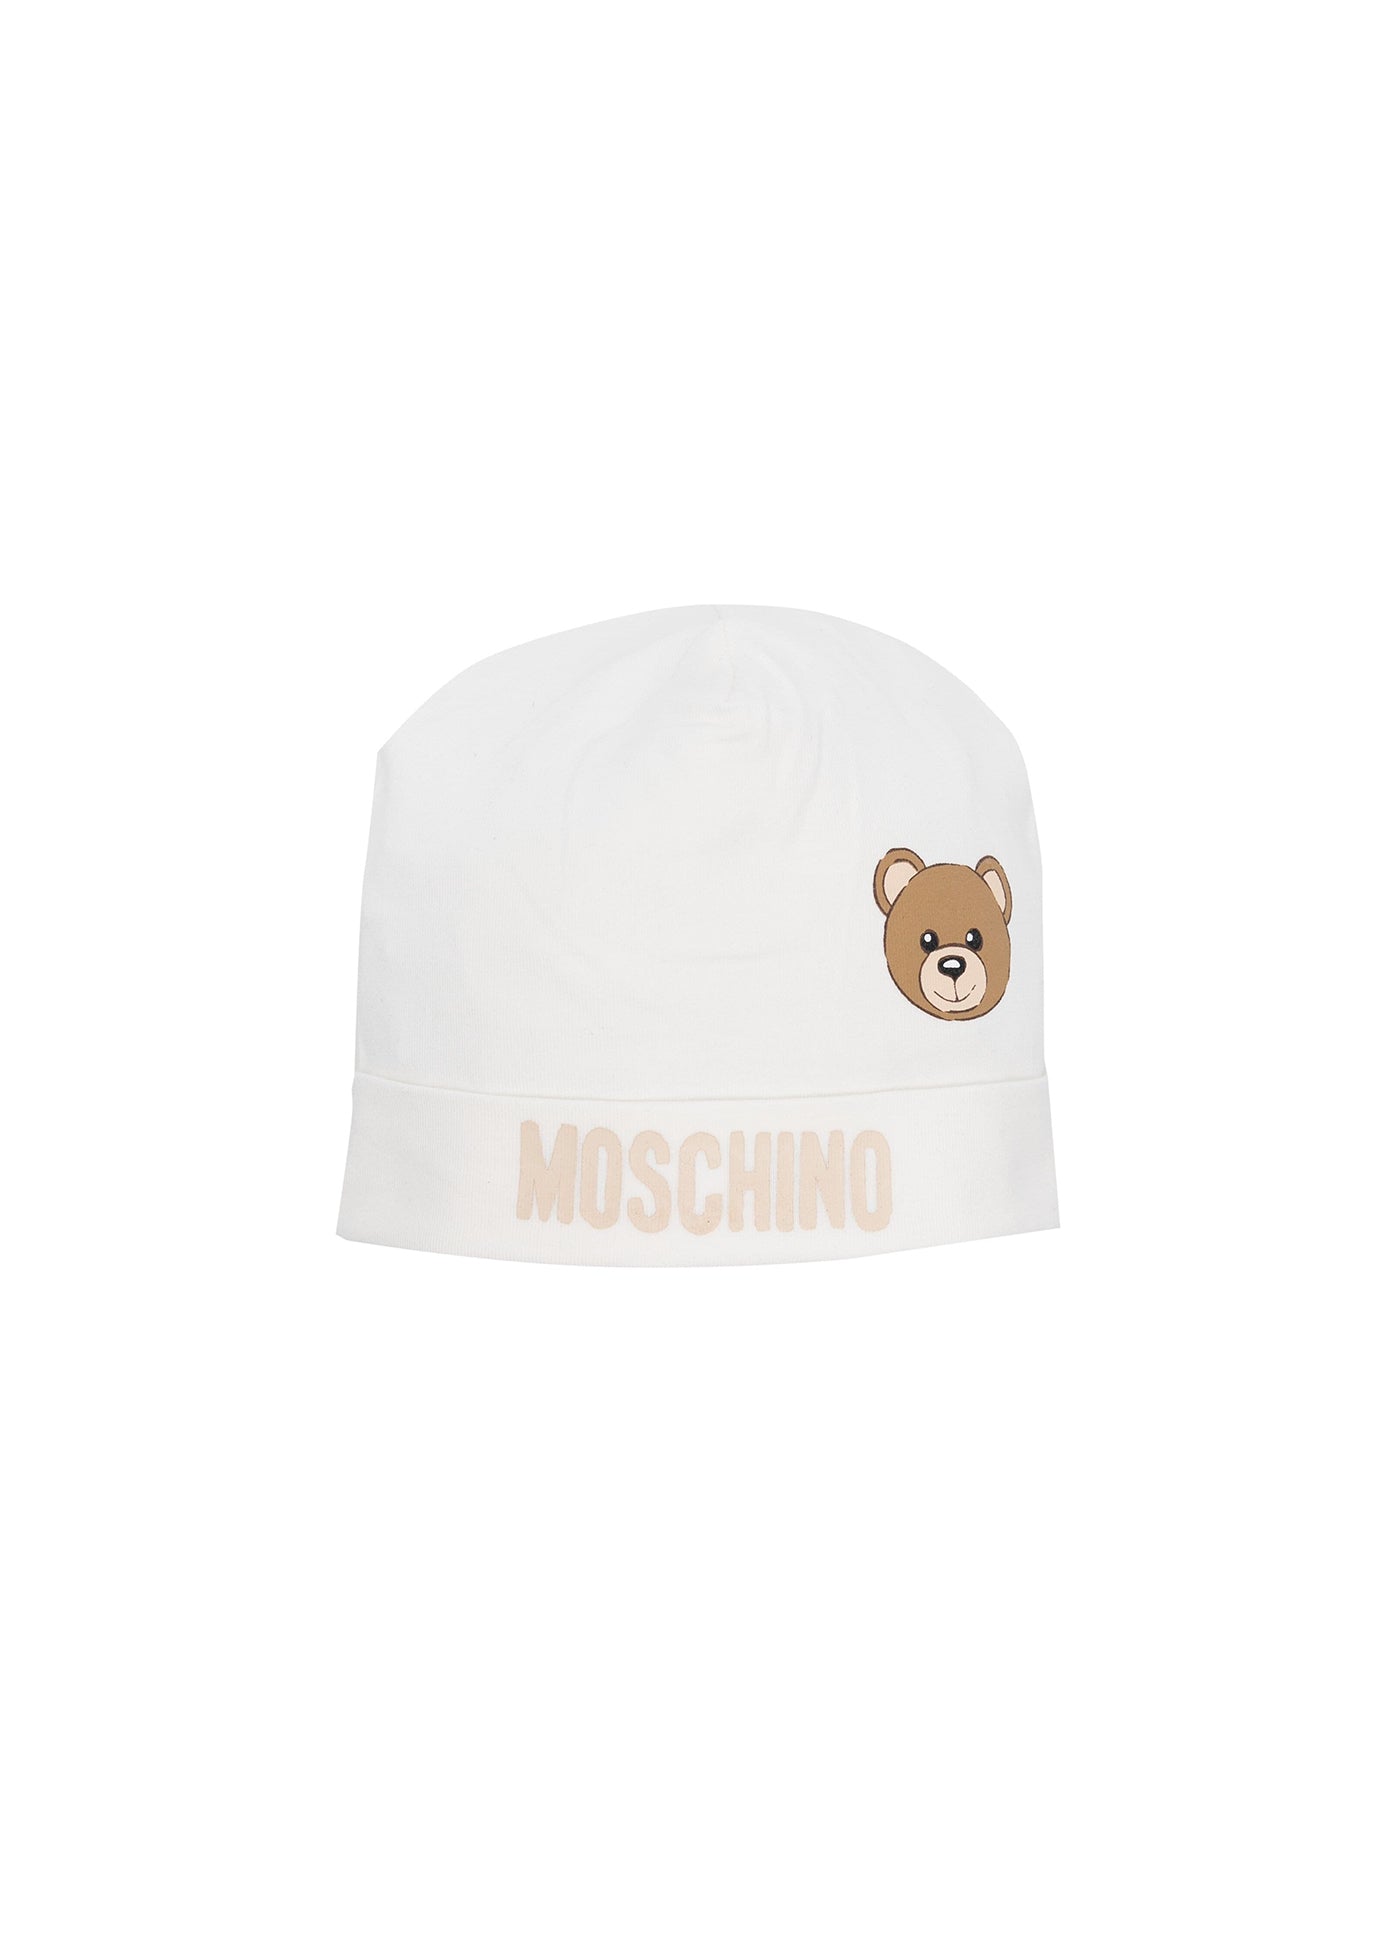 Moschino Kids Cappellino Bianco con Motivo Teddy Bear